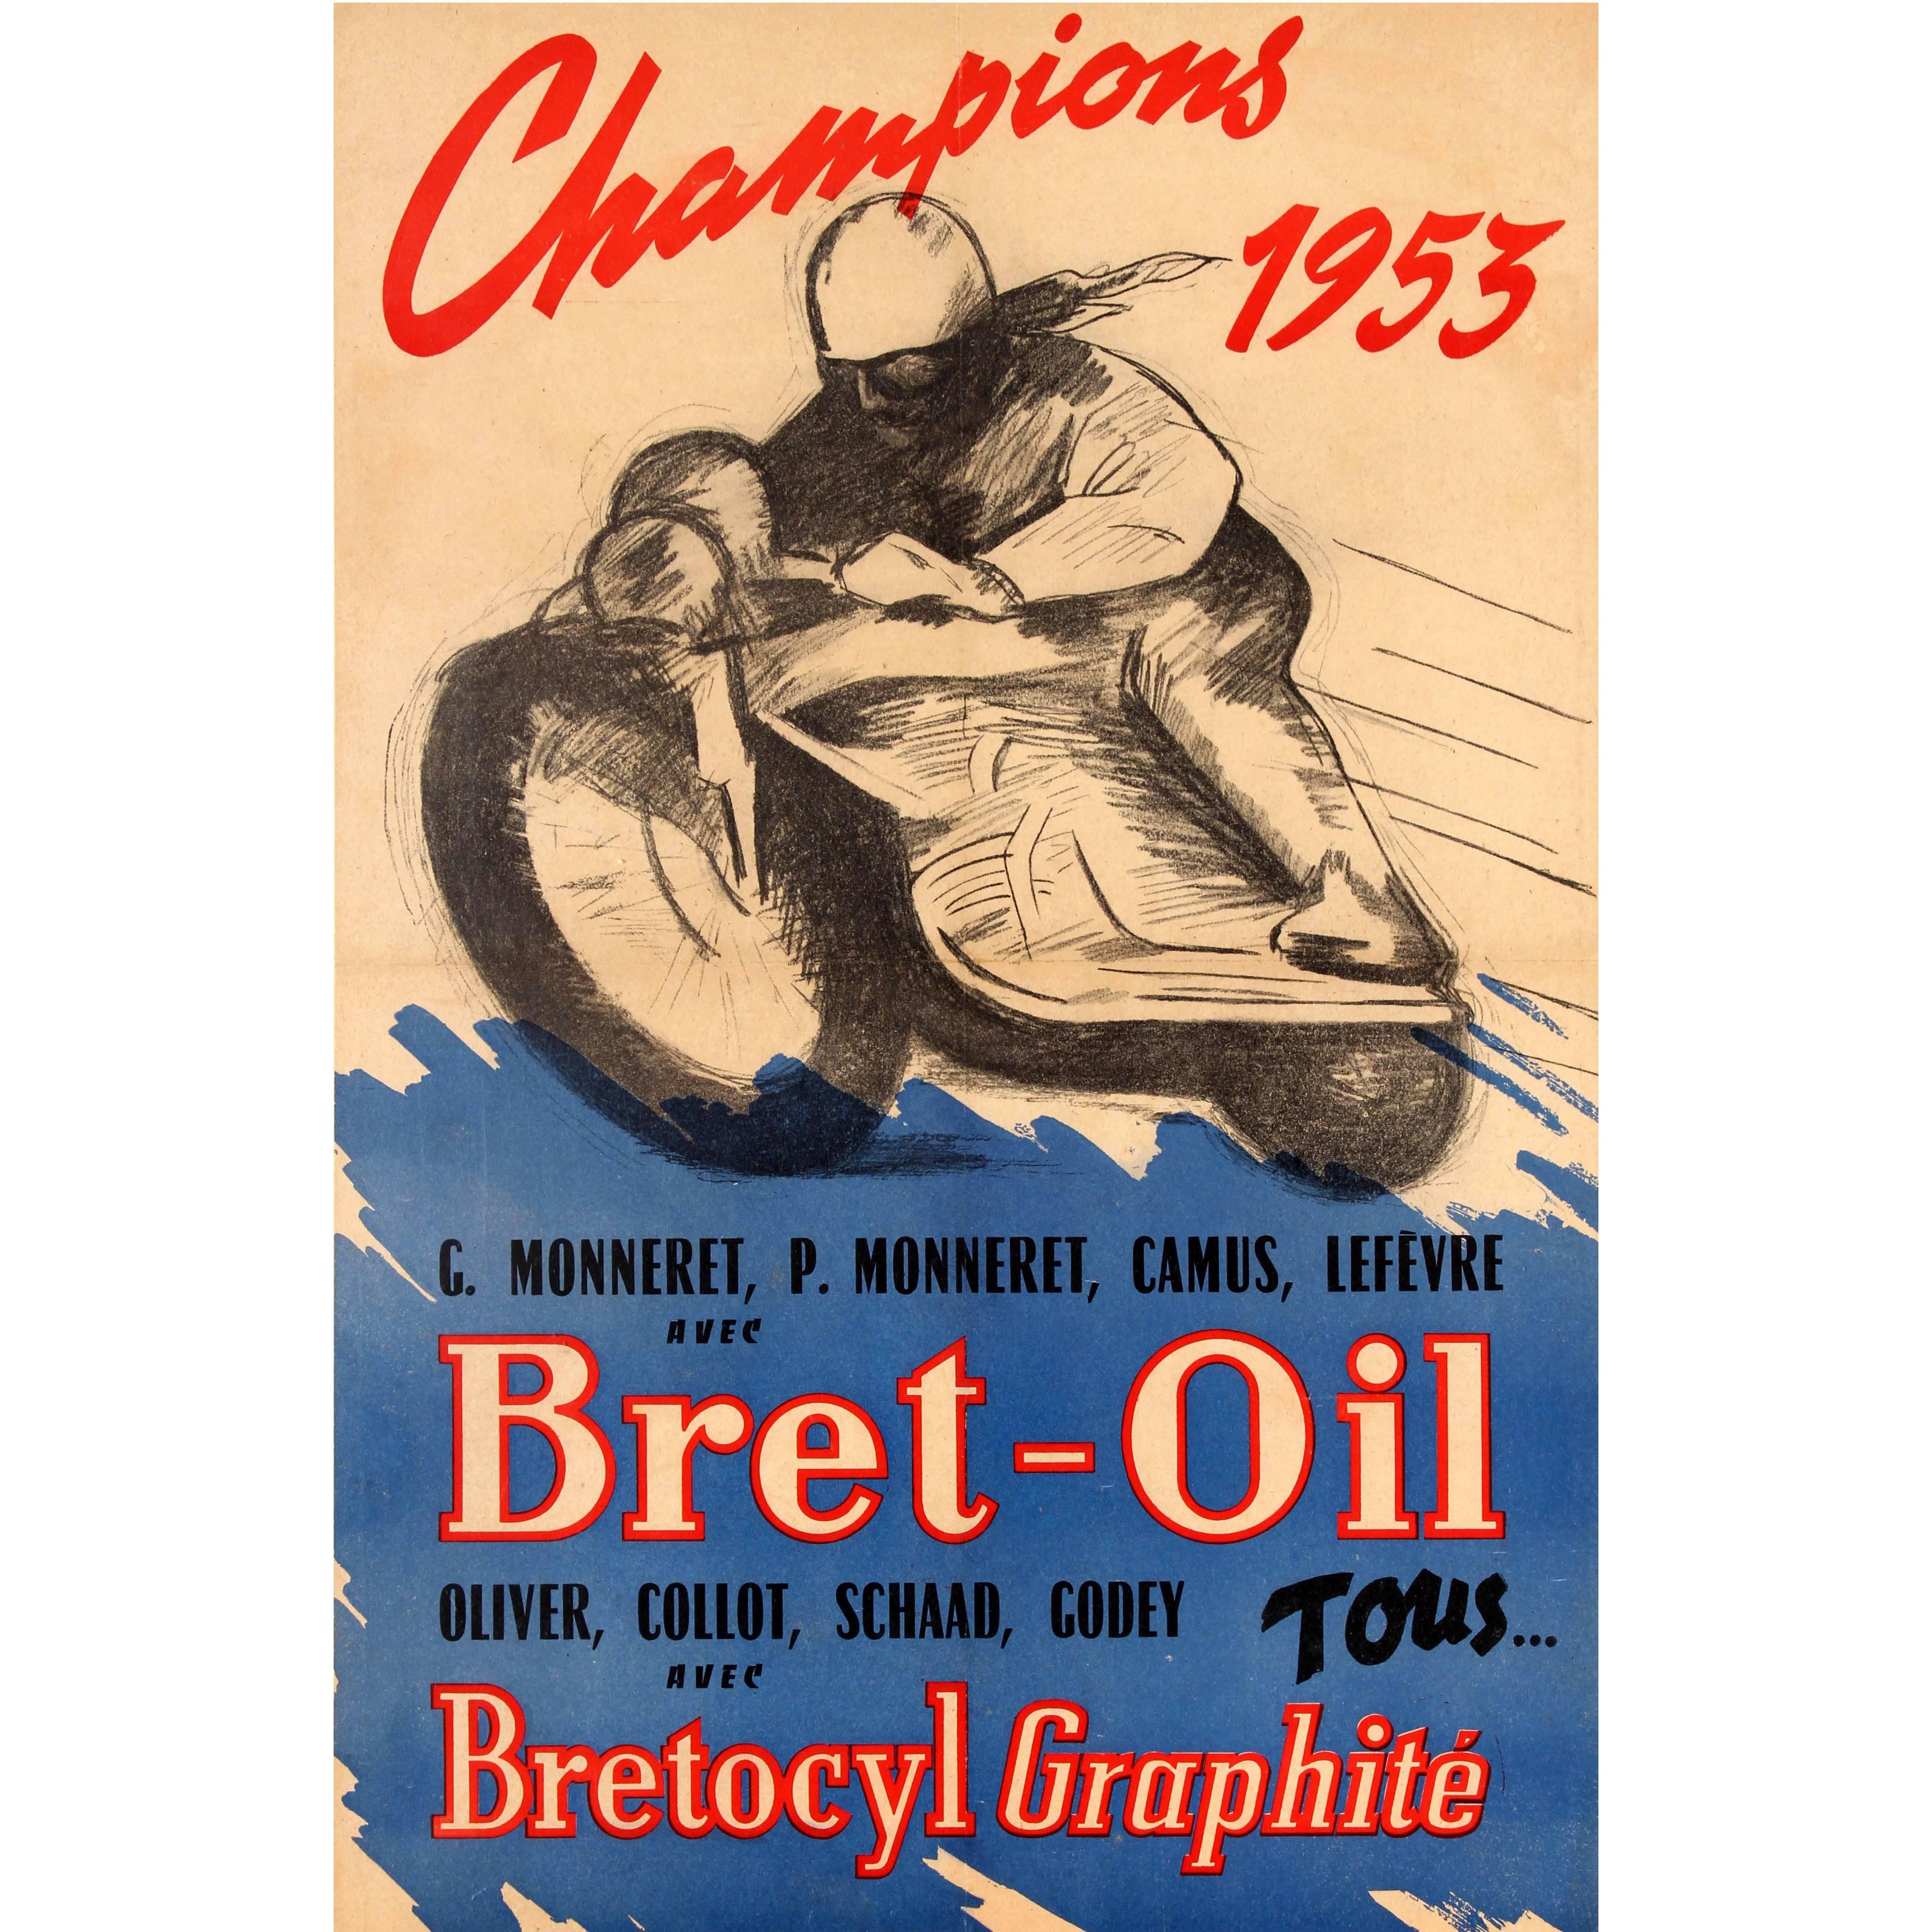 Original Vintage Bret Oil Motor Racing Sport Poster - Motorcycle Champions 1953 For Sale